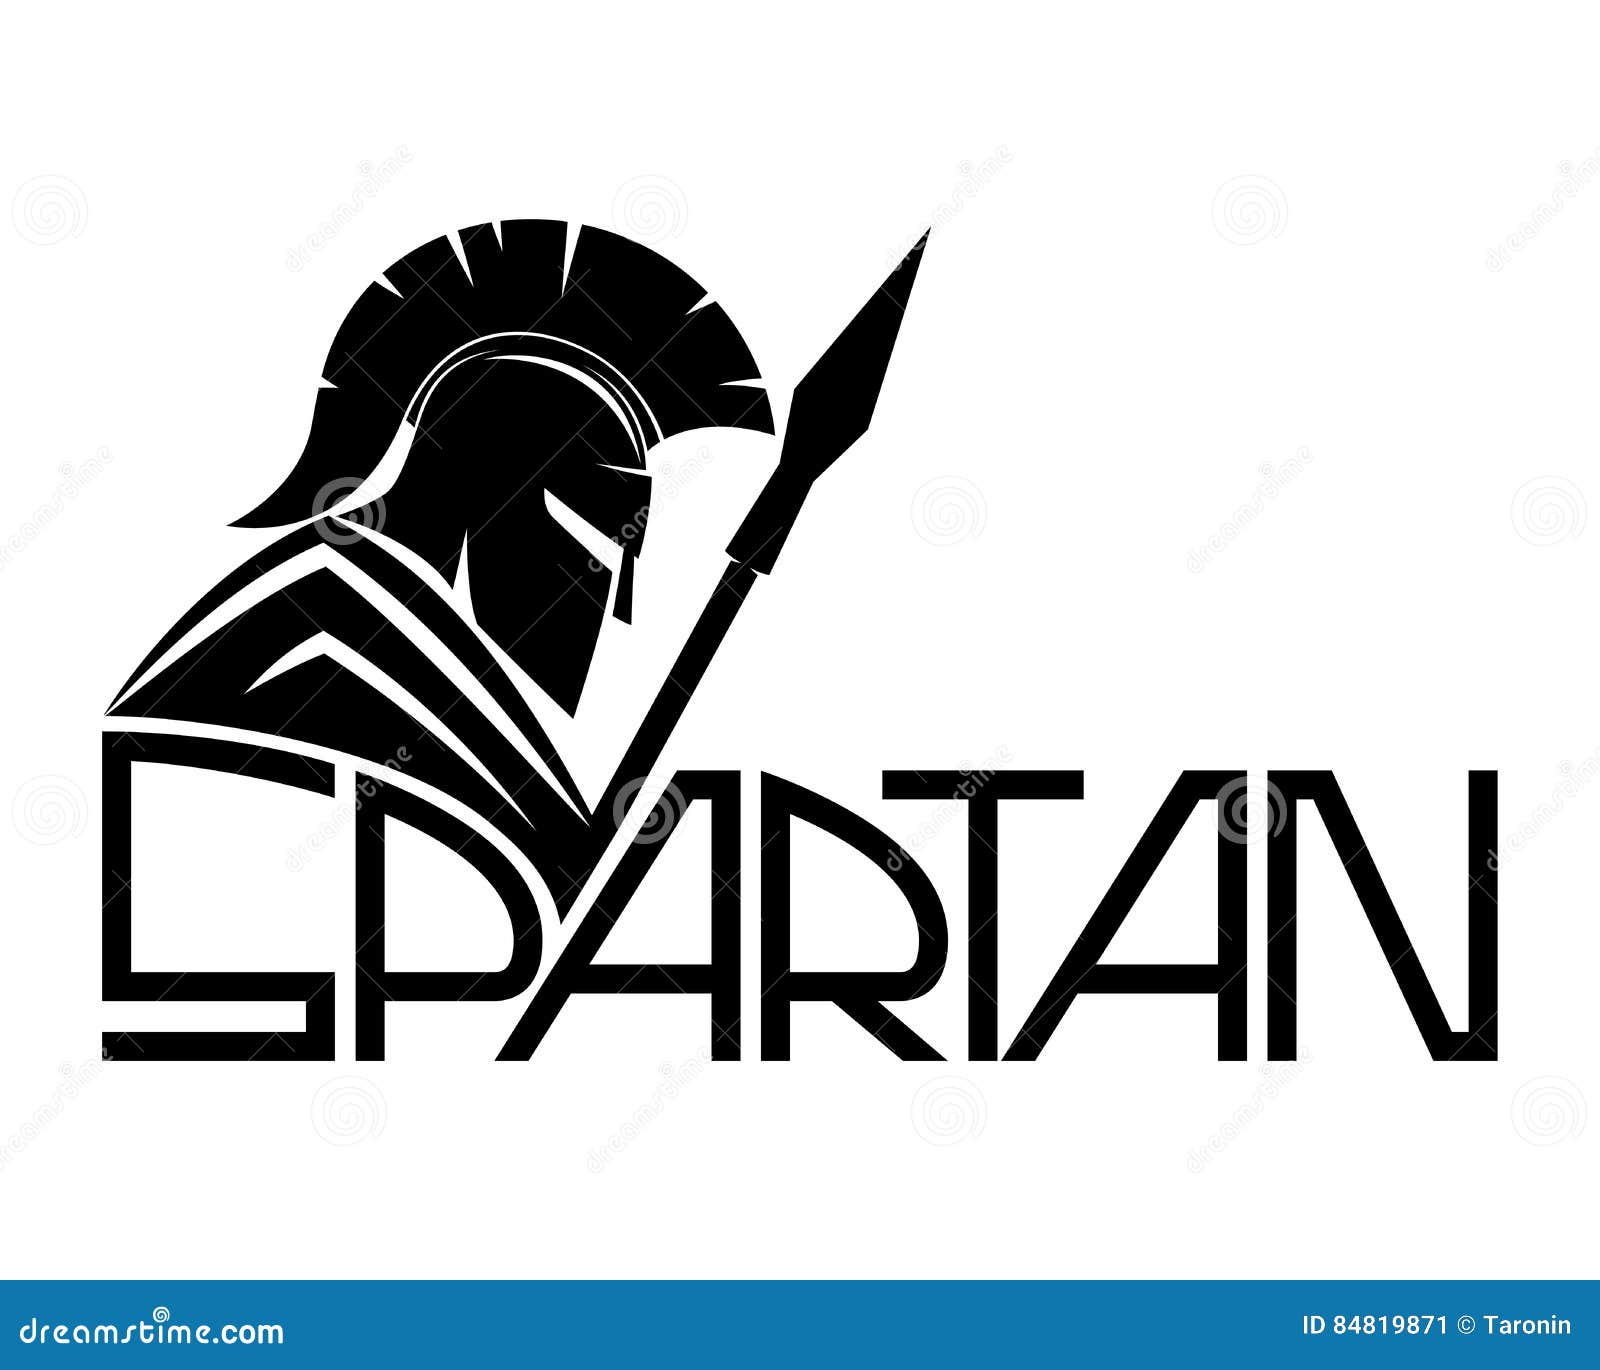 spartan black sign.